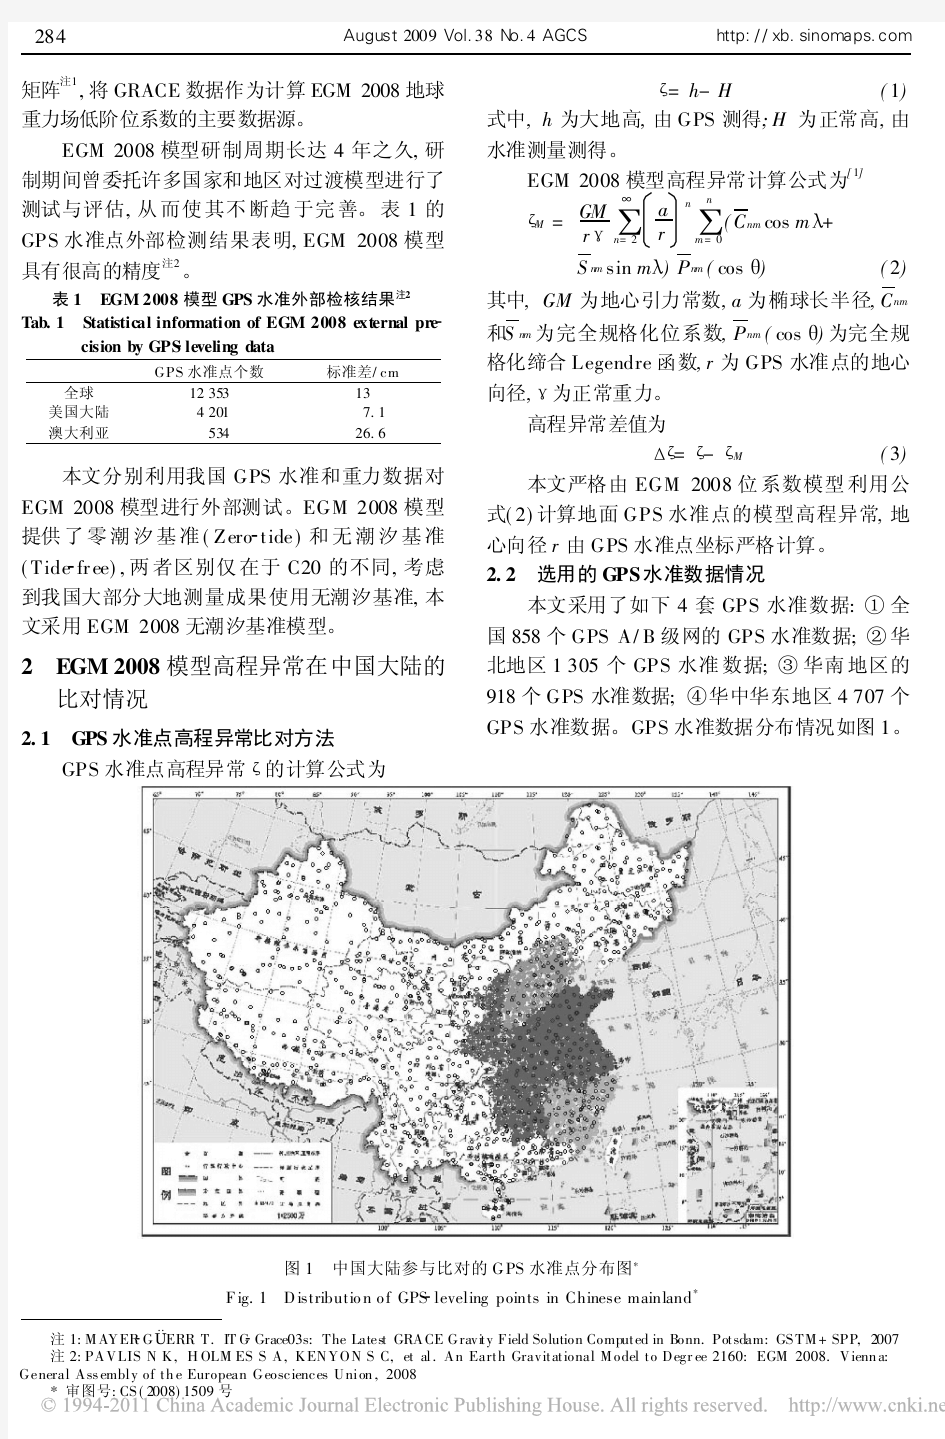 EGM2008地球重力场模型在中国大陆适用性分析